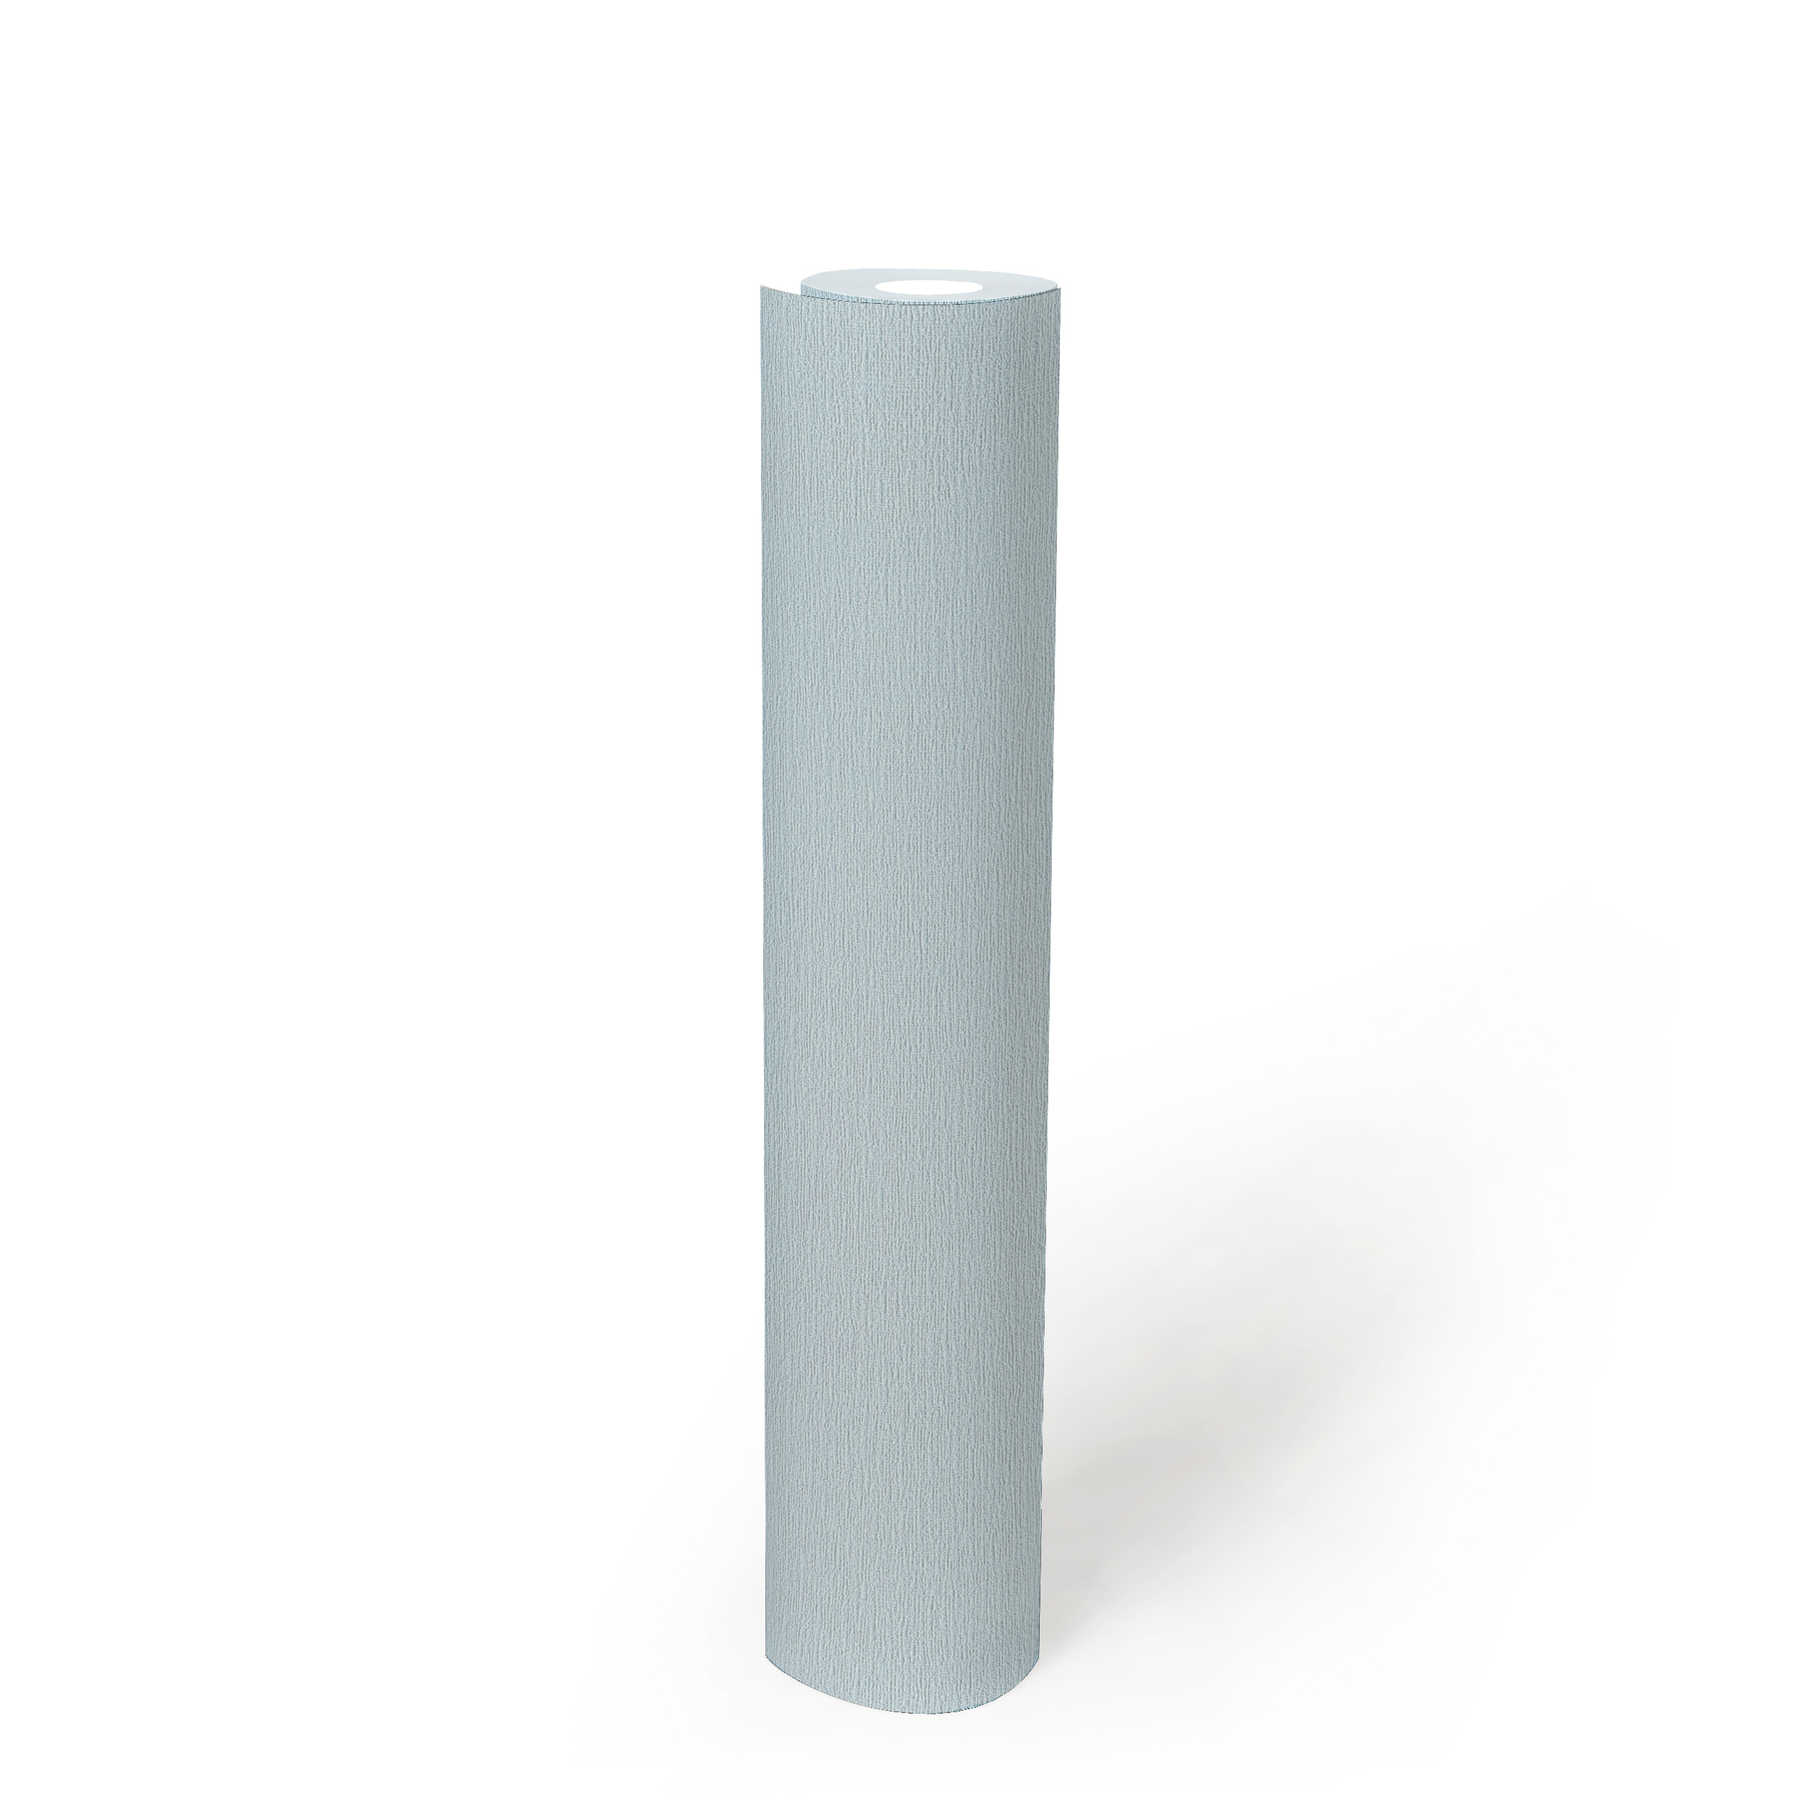             Non-woven wallpaper light blue monochrome matt with structure design
        